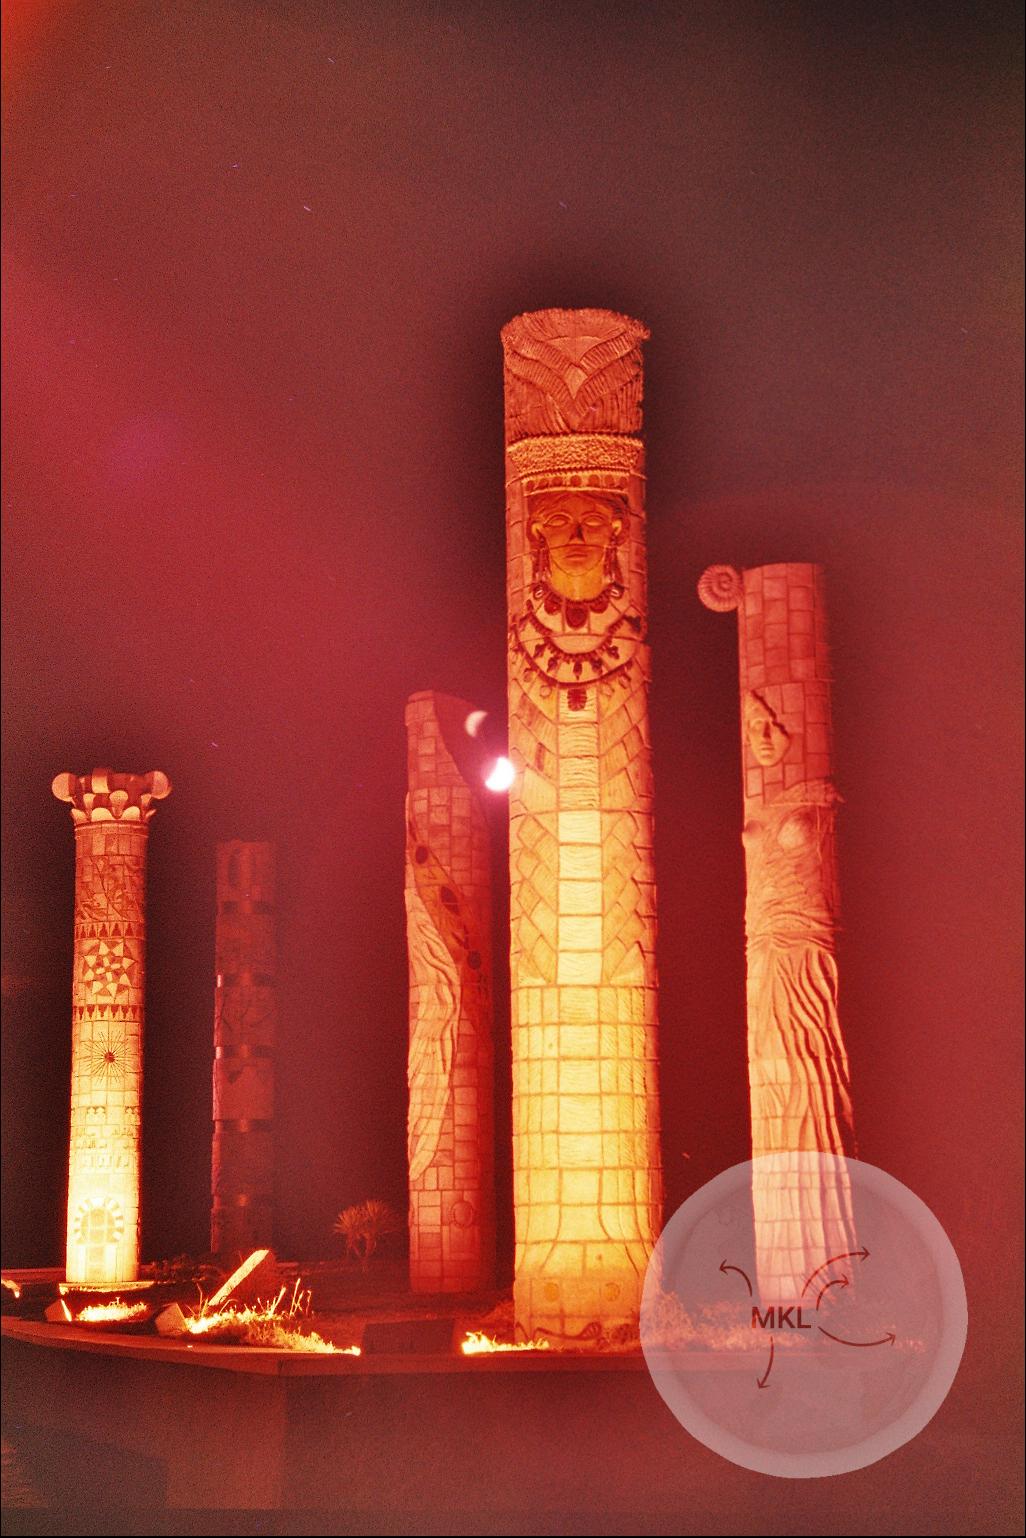 Pillars of the night